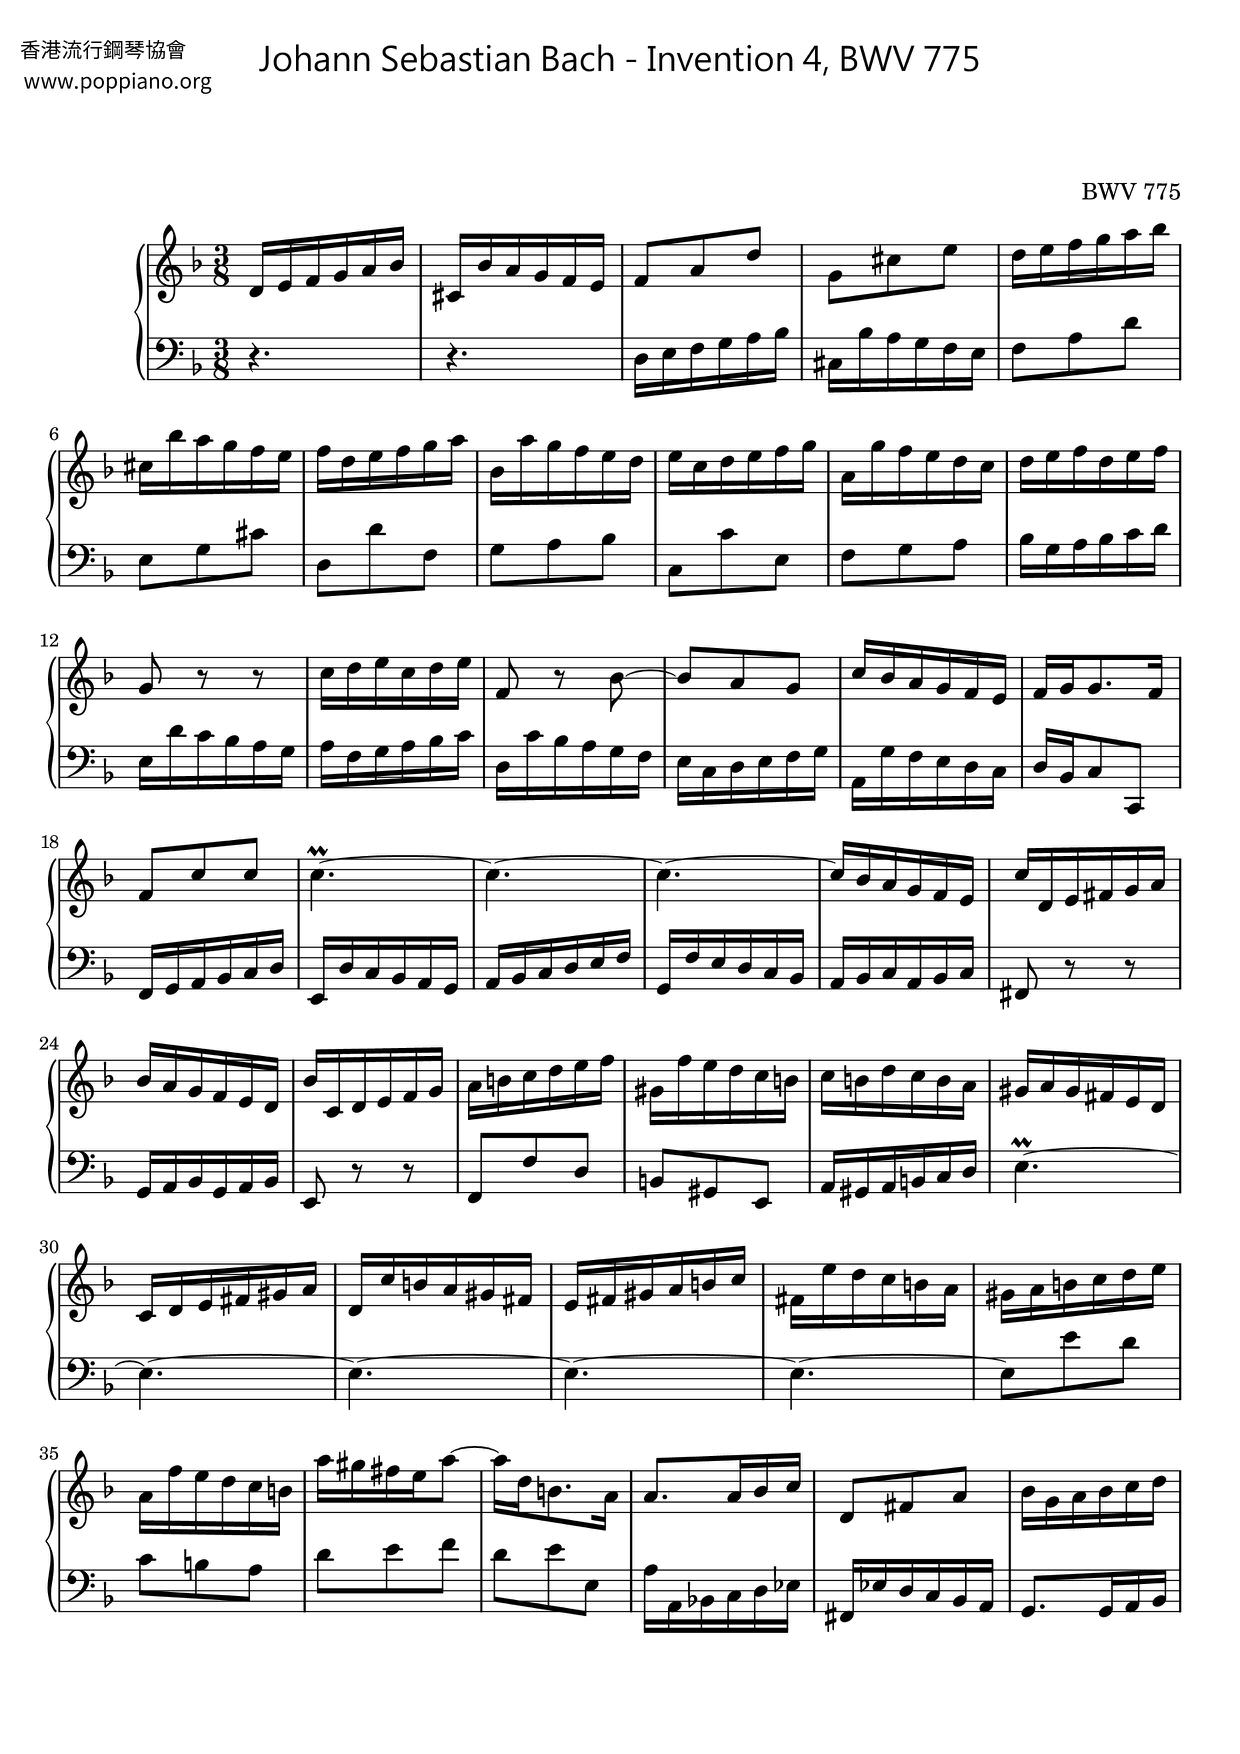 Invention 4, BWV 775 Score